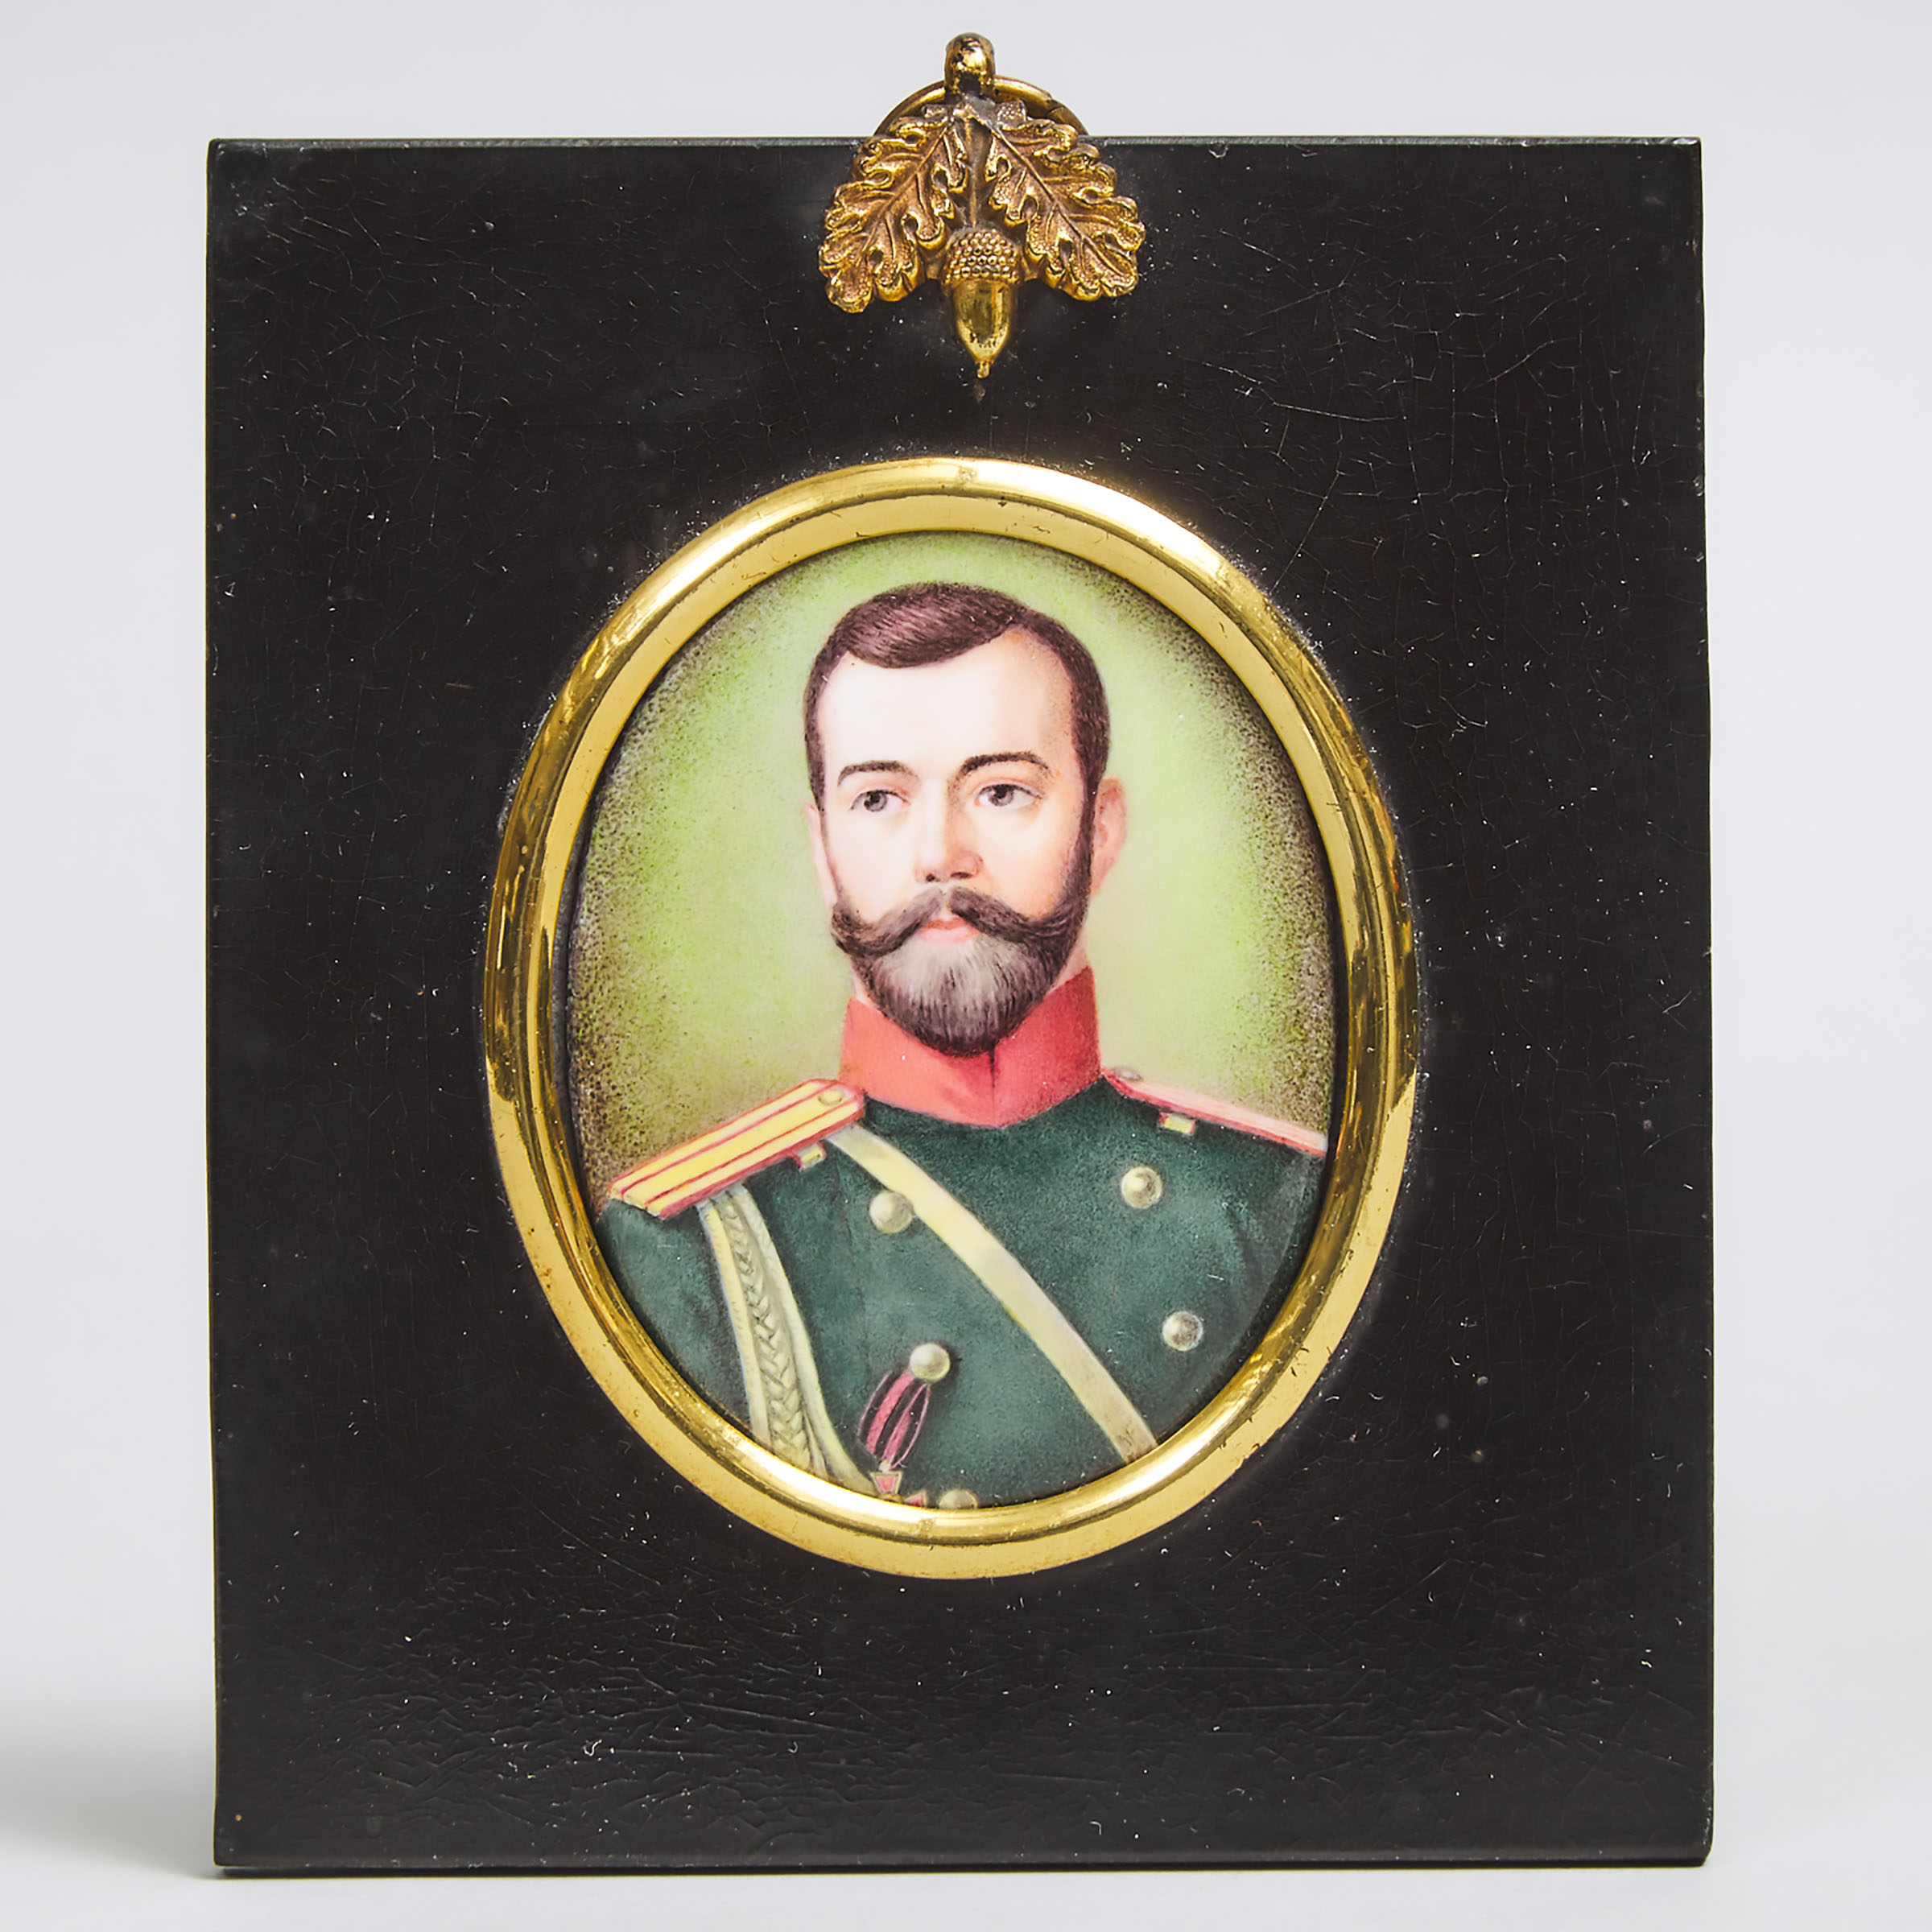 Russian School Enamelled Copper Portrait of Emperor Nicholas II, early-mid 20th century